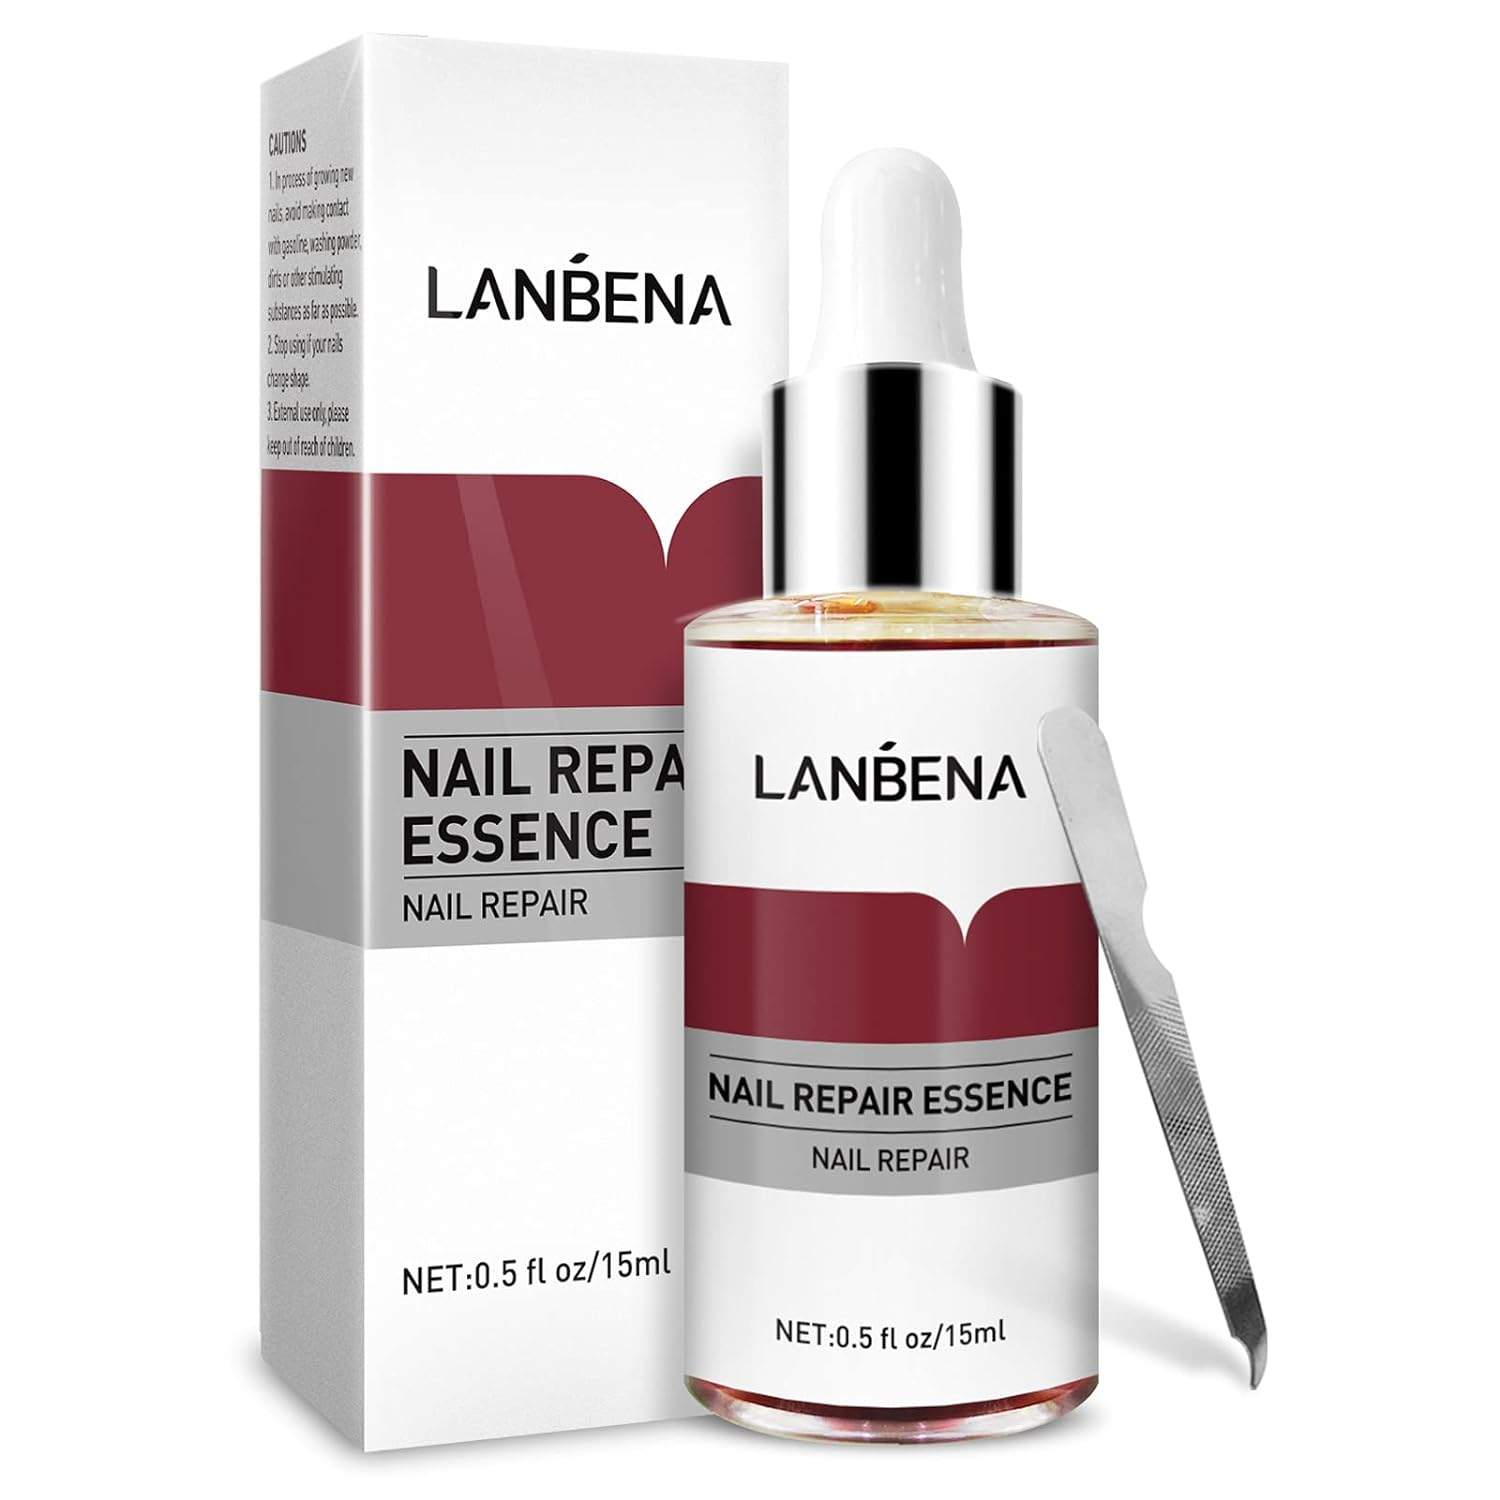 LANBENA” Nail Repair Essence Oil